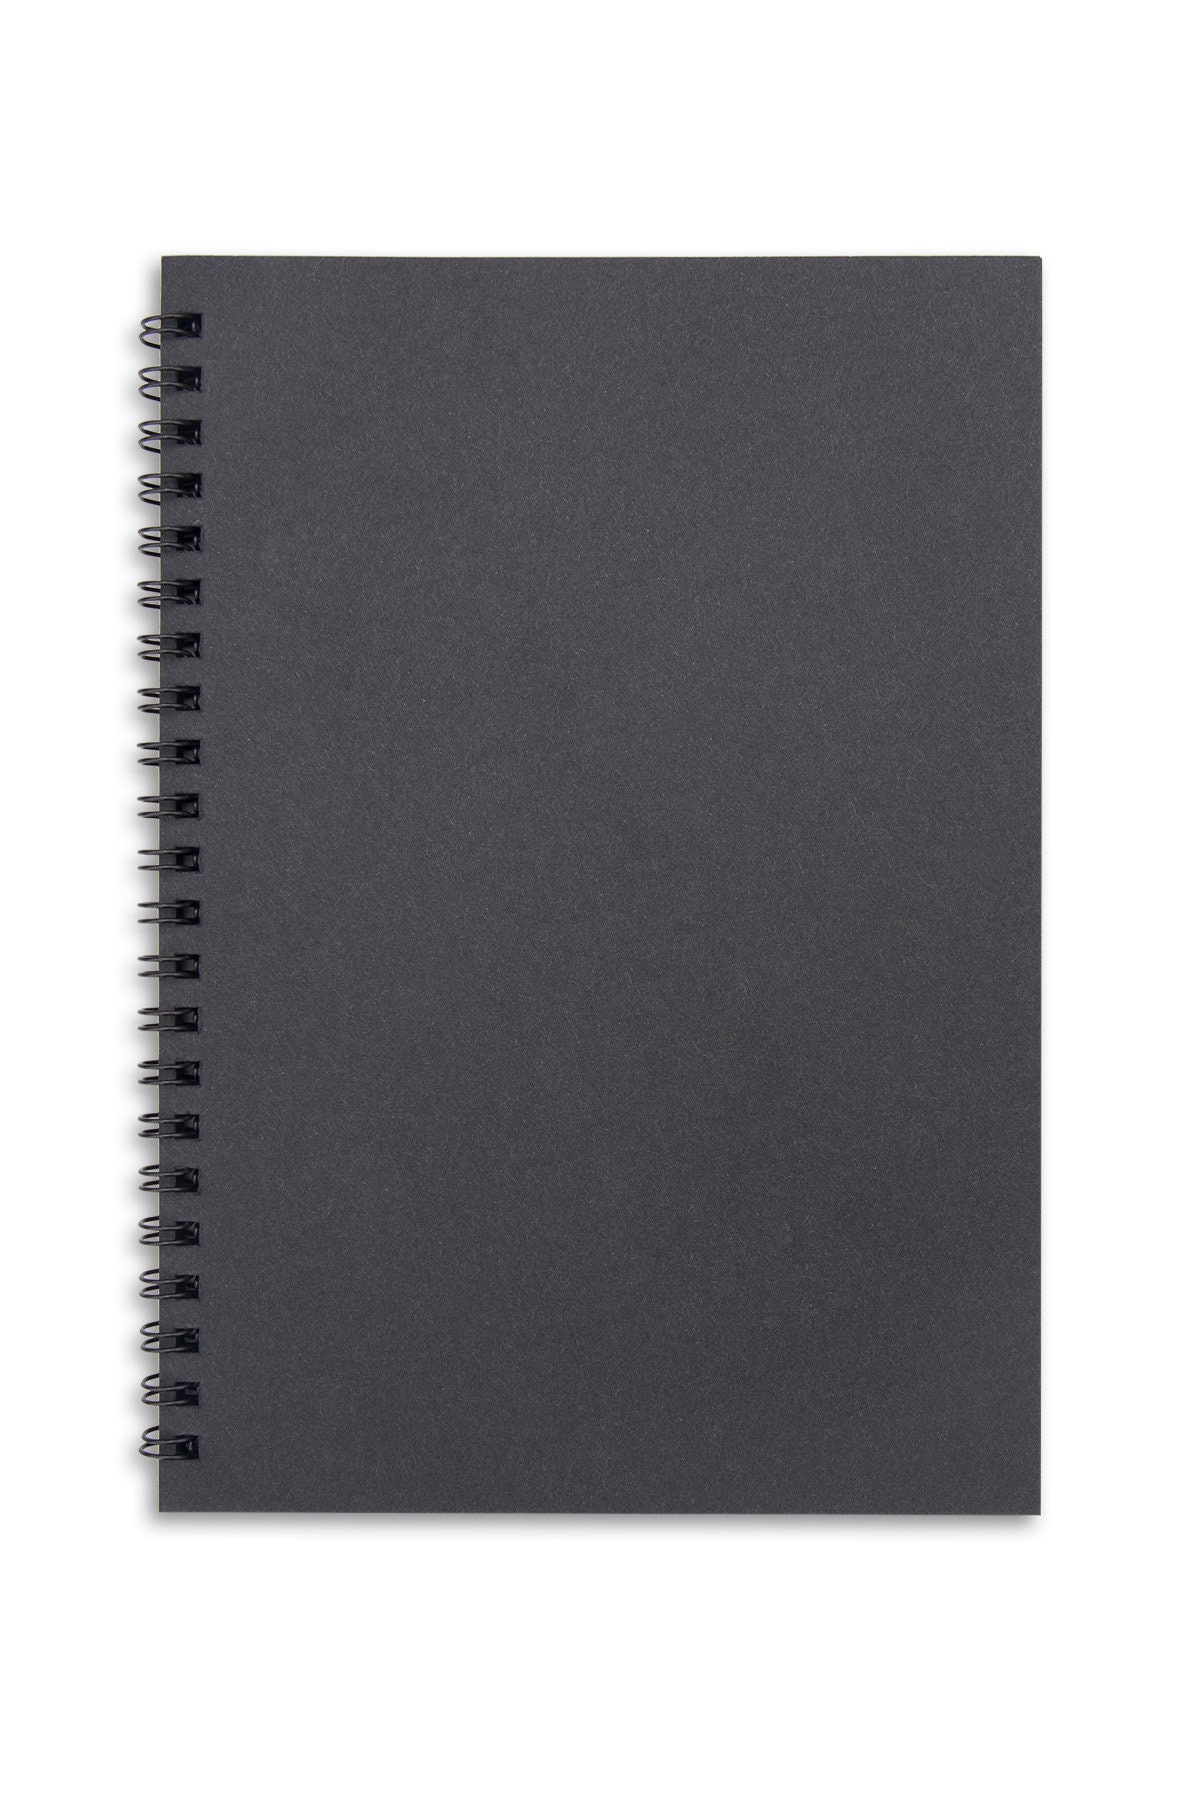 6 SET Black Notebook 14x20cm5.5x7.8 Inch, Black Paper Notebook